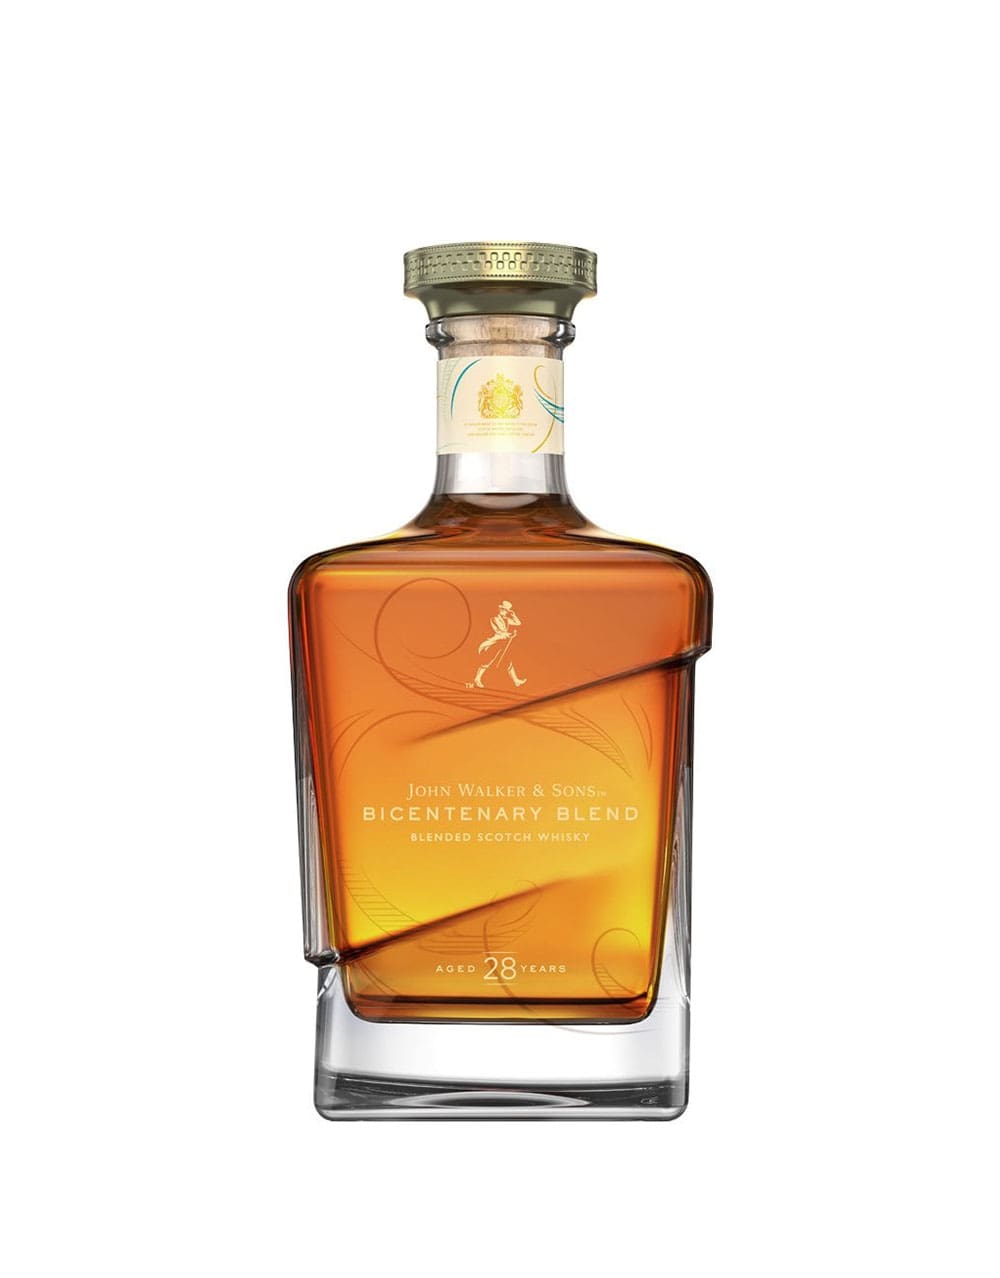 John Walker & Sons Bicentenary Blend 28 Year Old Blended Scotch Whisky